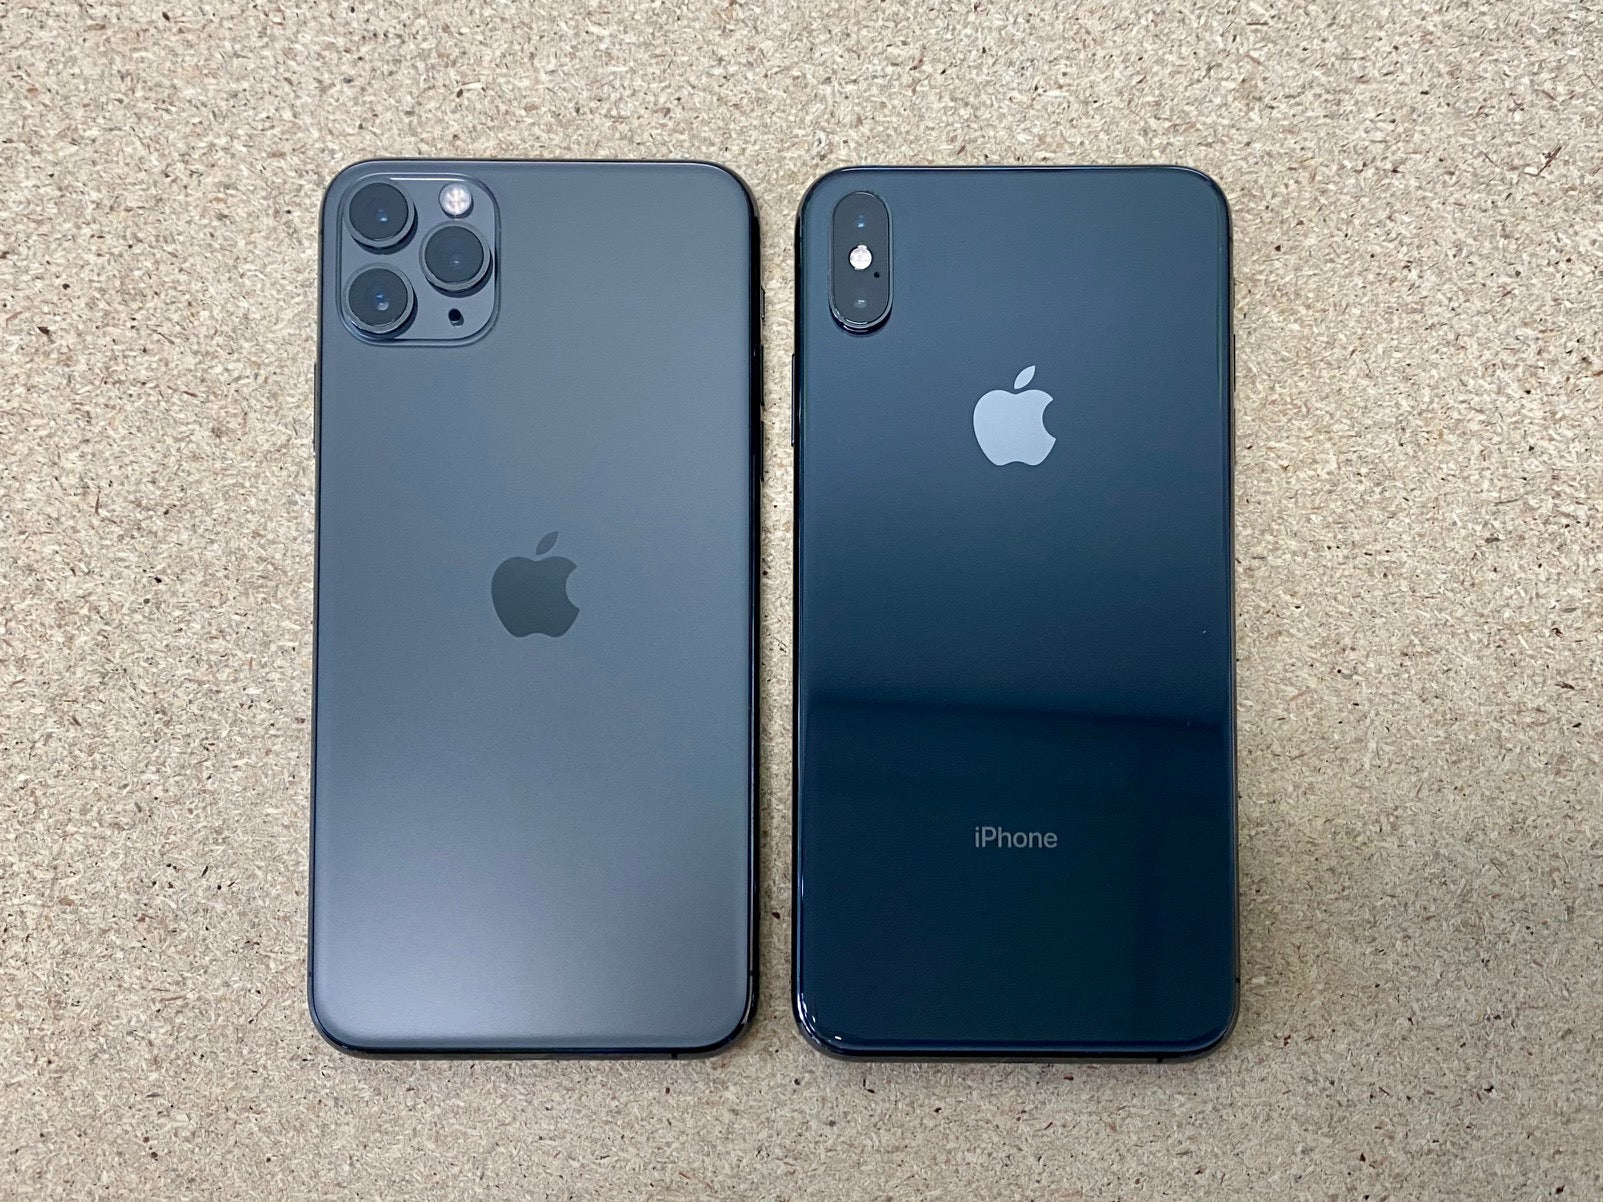 iPhone 11 Pro Max vs iPhone XS Max